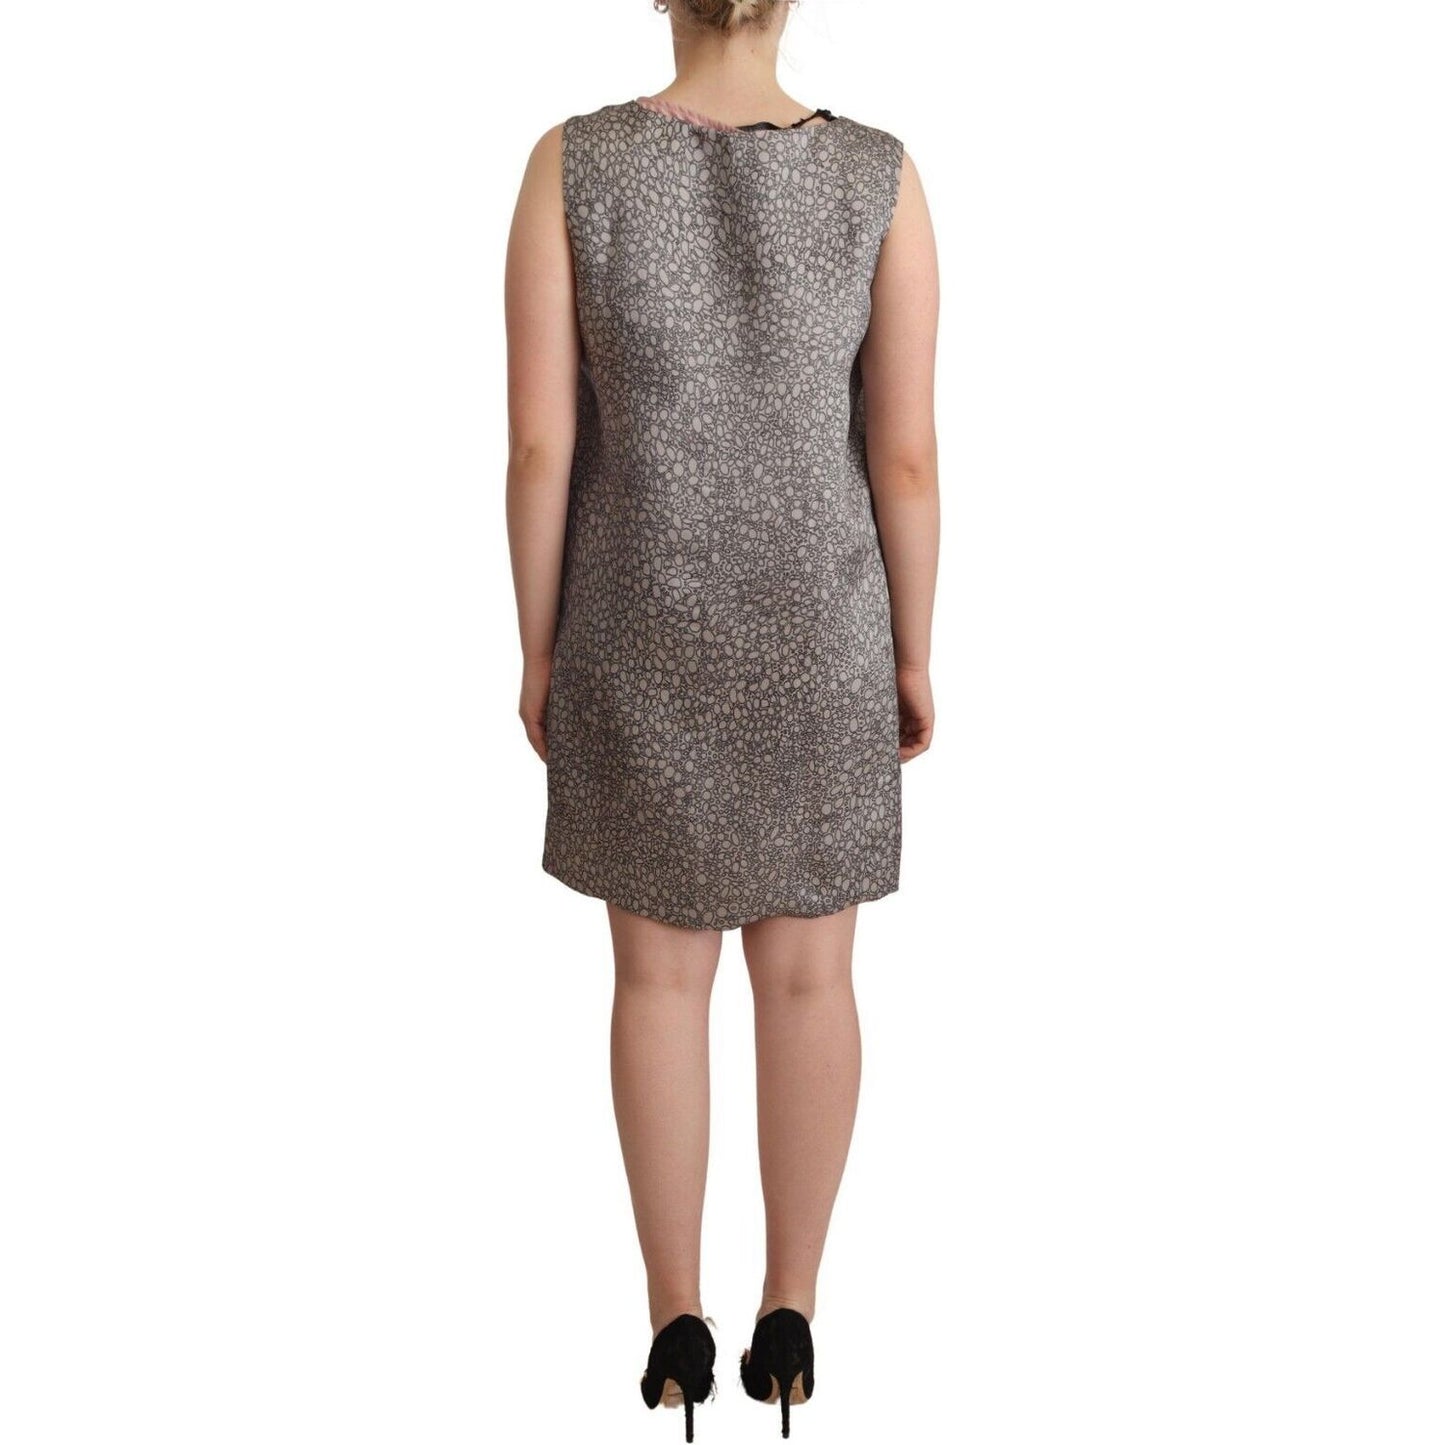 Comeforbreakfast Elegant Silk Shift Dress in Sophisticated Gray WOMAN DRESSES gray-sleeveless-shift-knee-length-dress s-l1600-2-89-d687874a-232.jpg